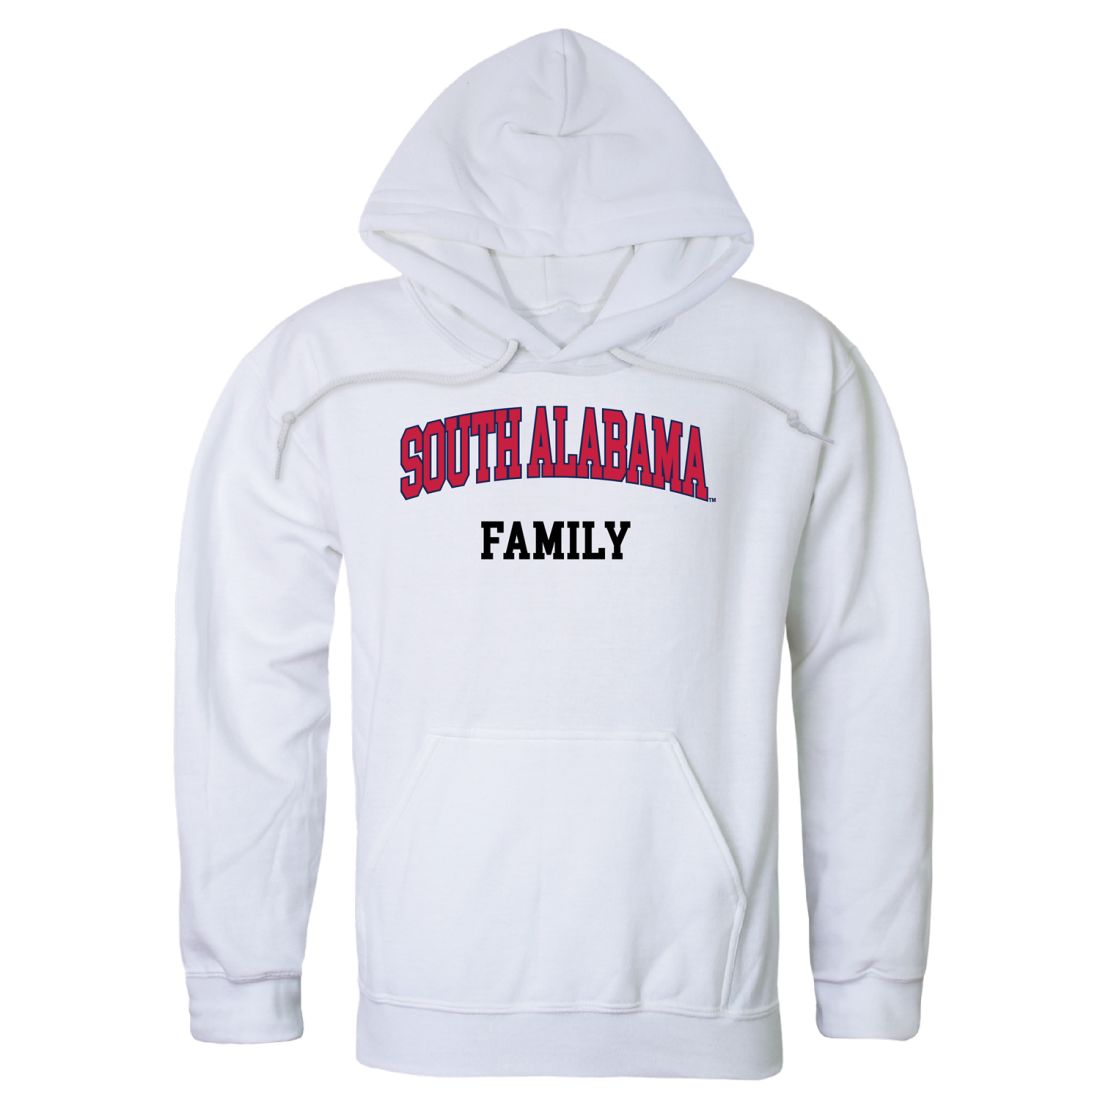 University of South Alabama Jaguars Family Hoodie Sweatshirts